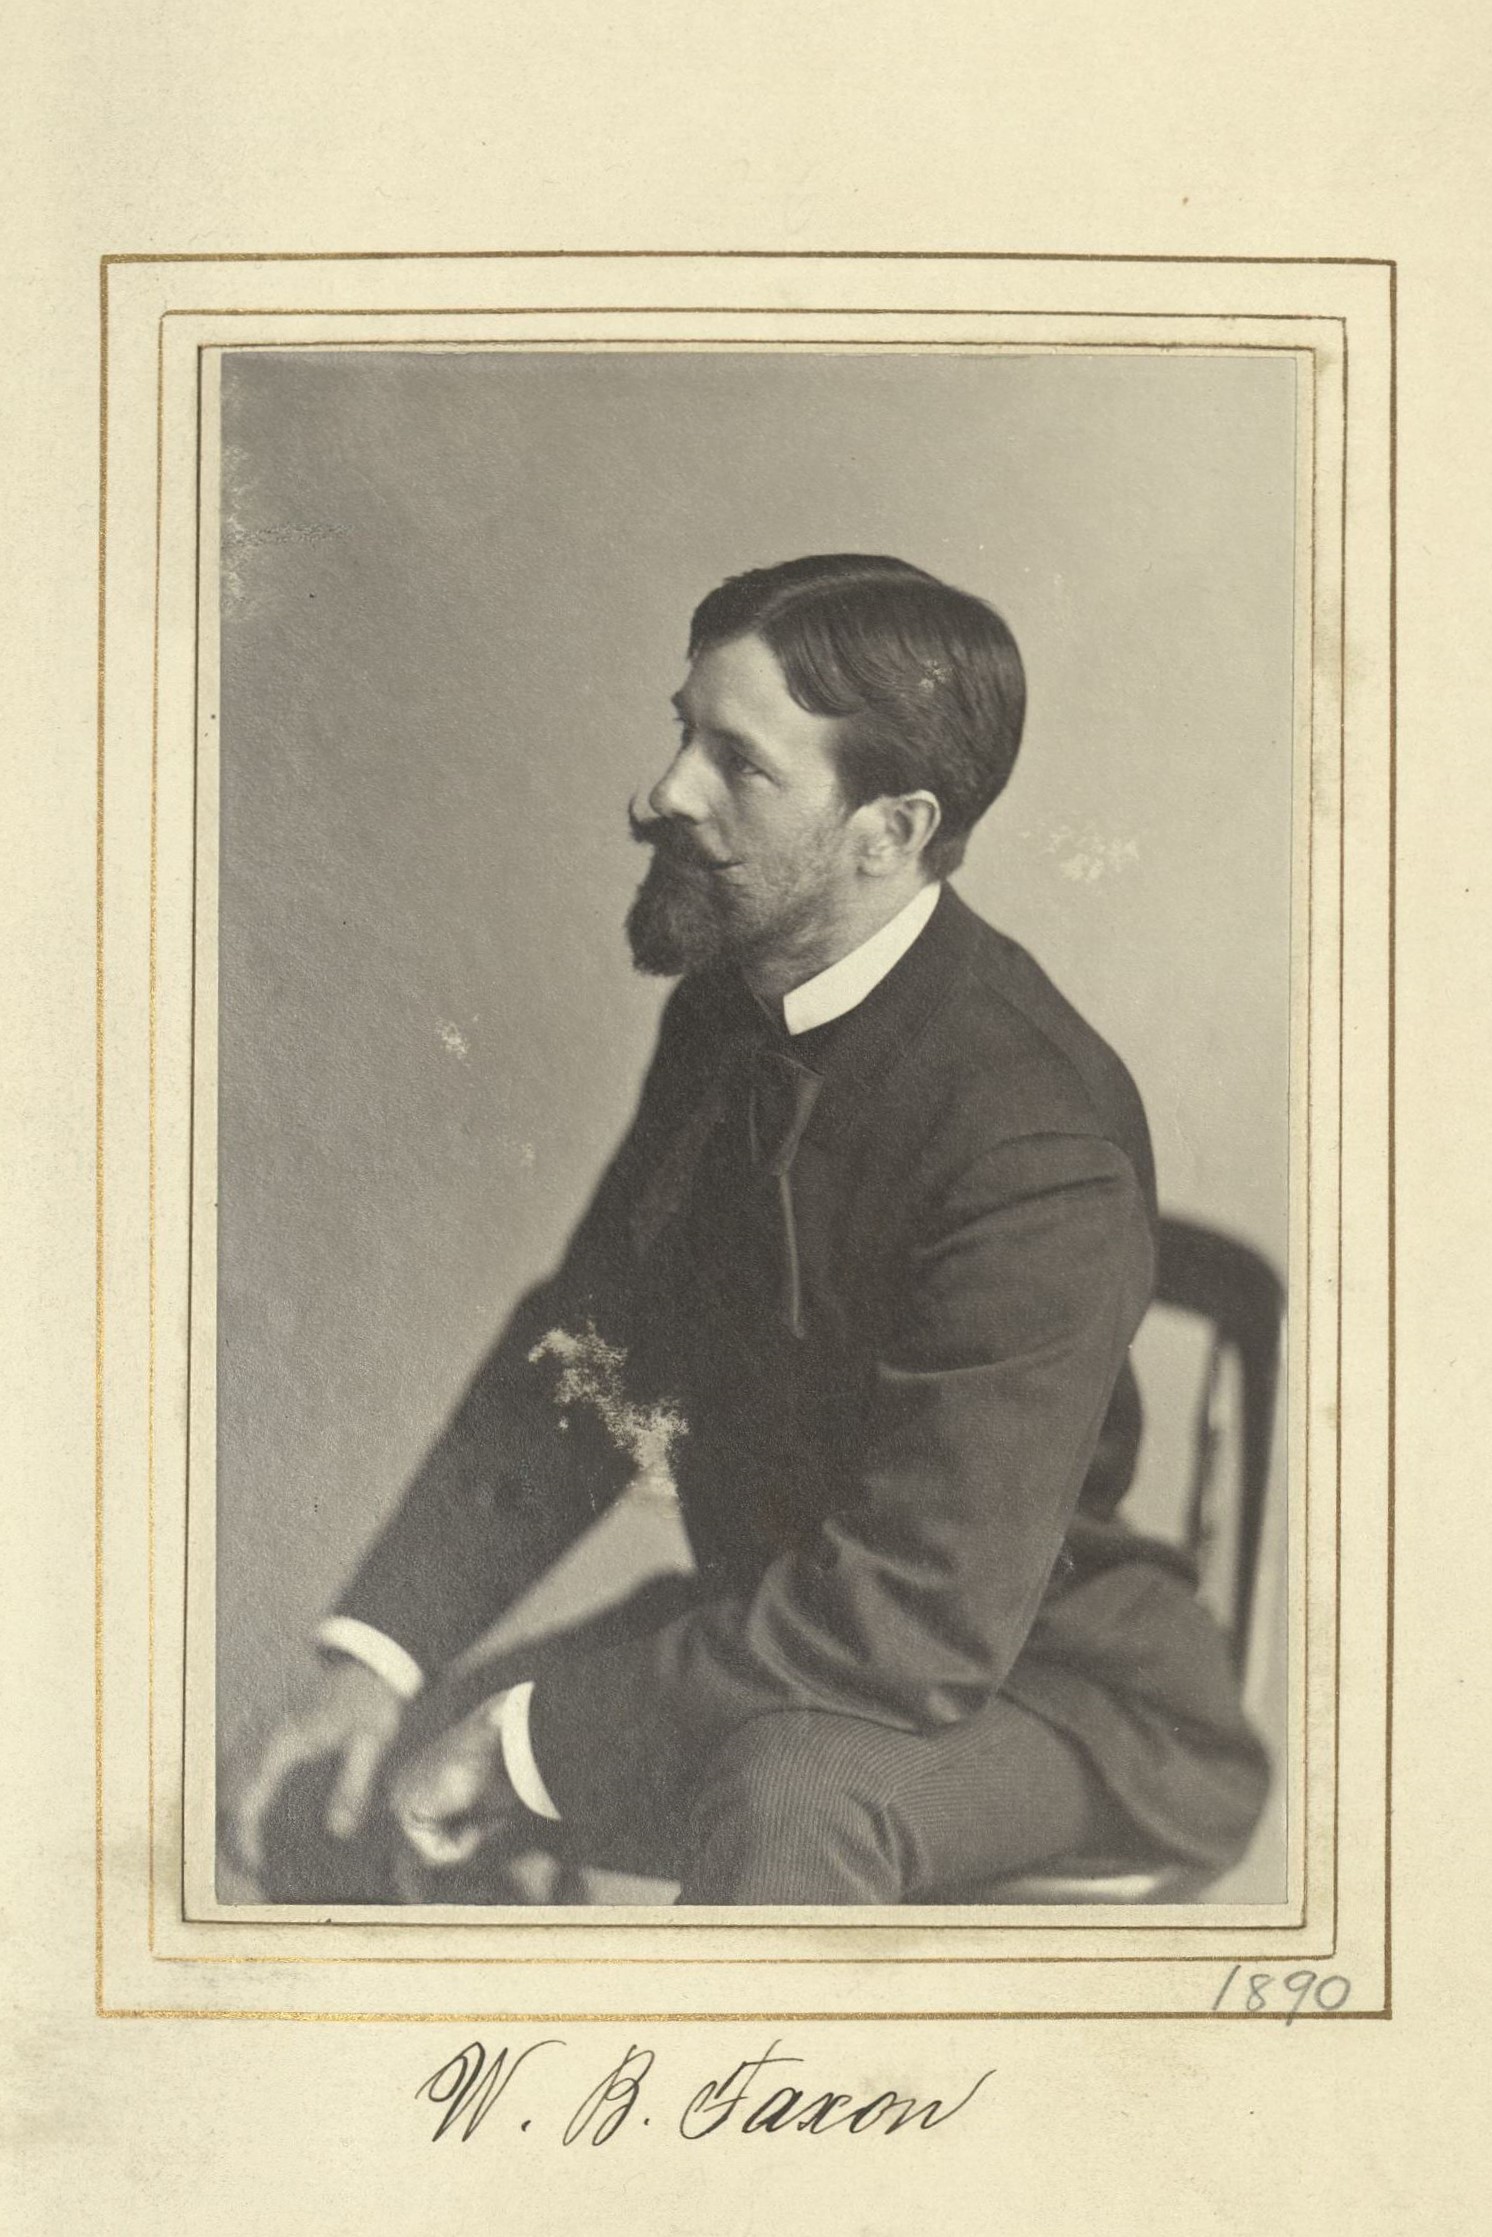 Member portrait of William Bailey Faxon